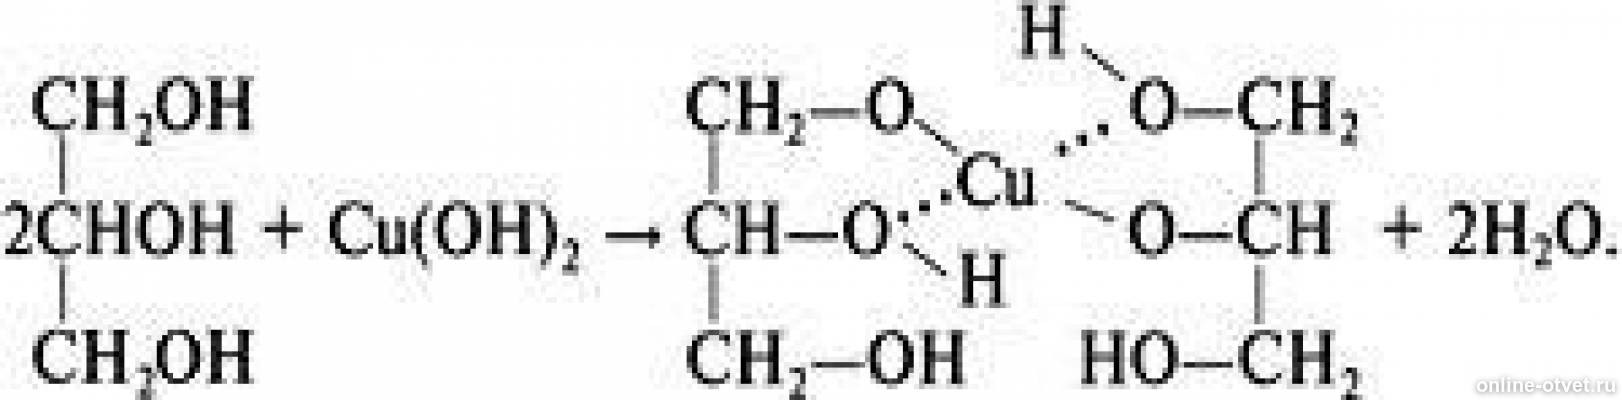 Глицерин и сульфат меди. Глицерин и оксид меди. Глицерин и оксид меди 2. Уравнение реакции глицерина с гидроксидом меди 2. Глицерин плюс оксид меди 2.